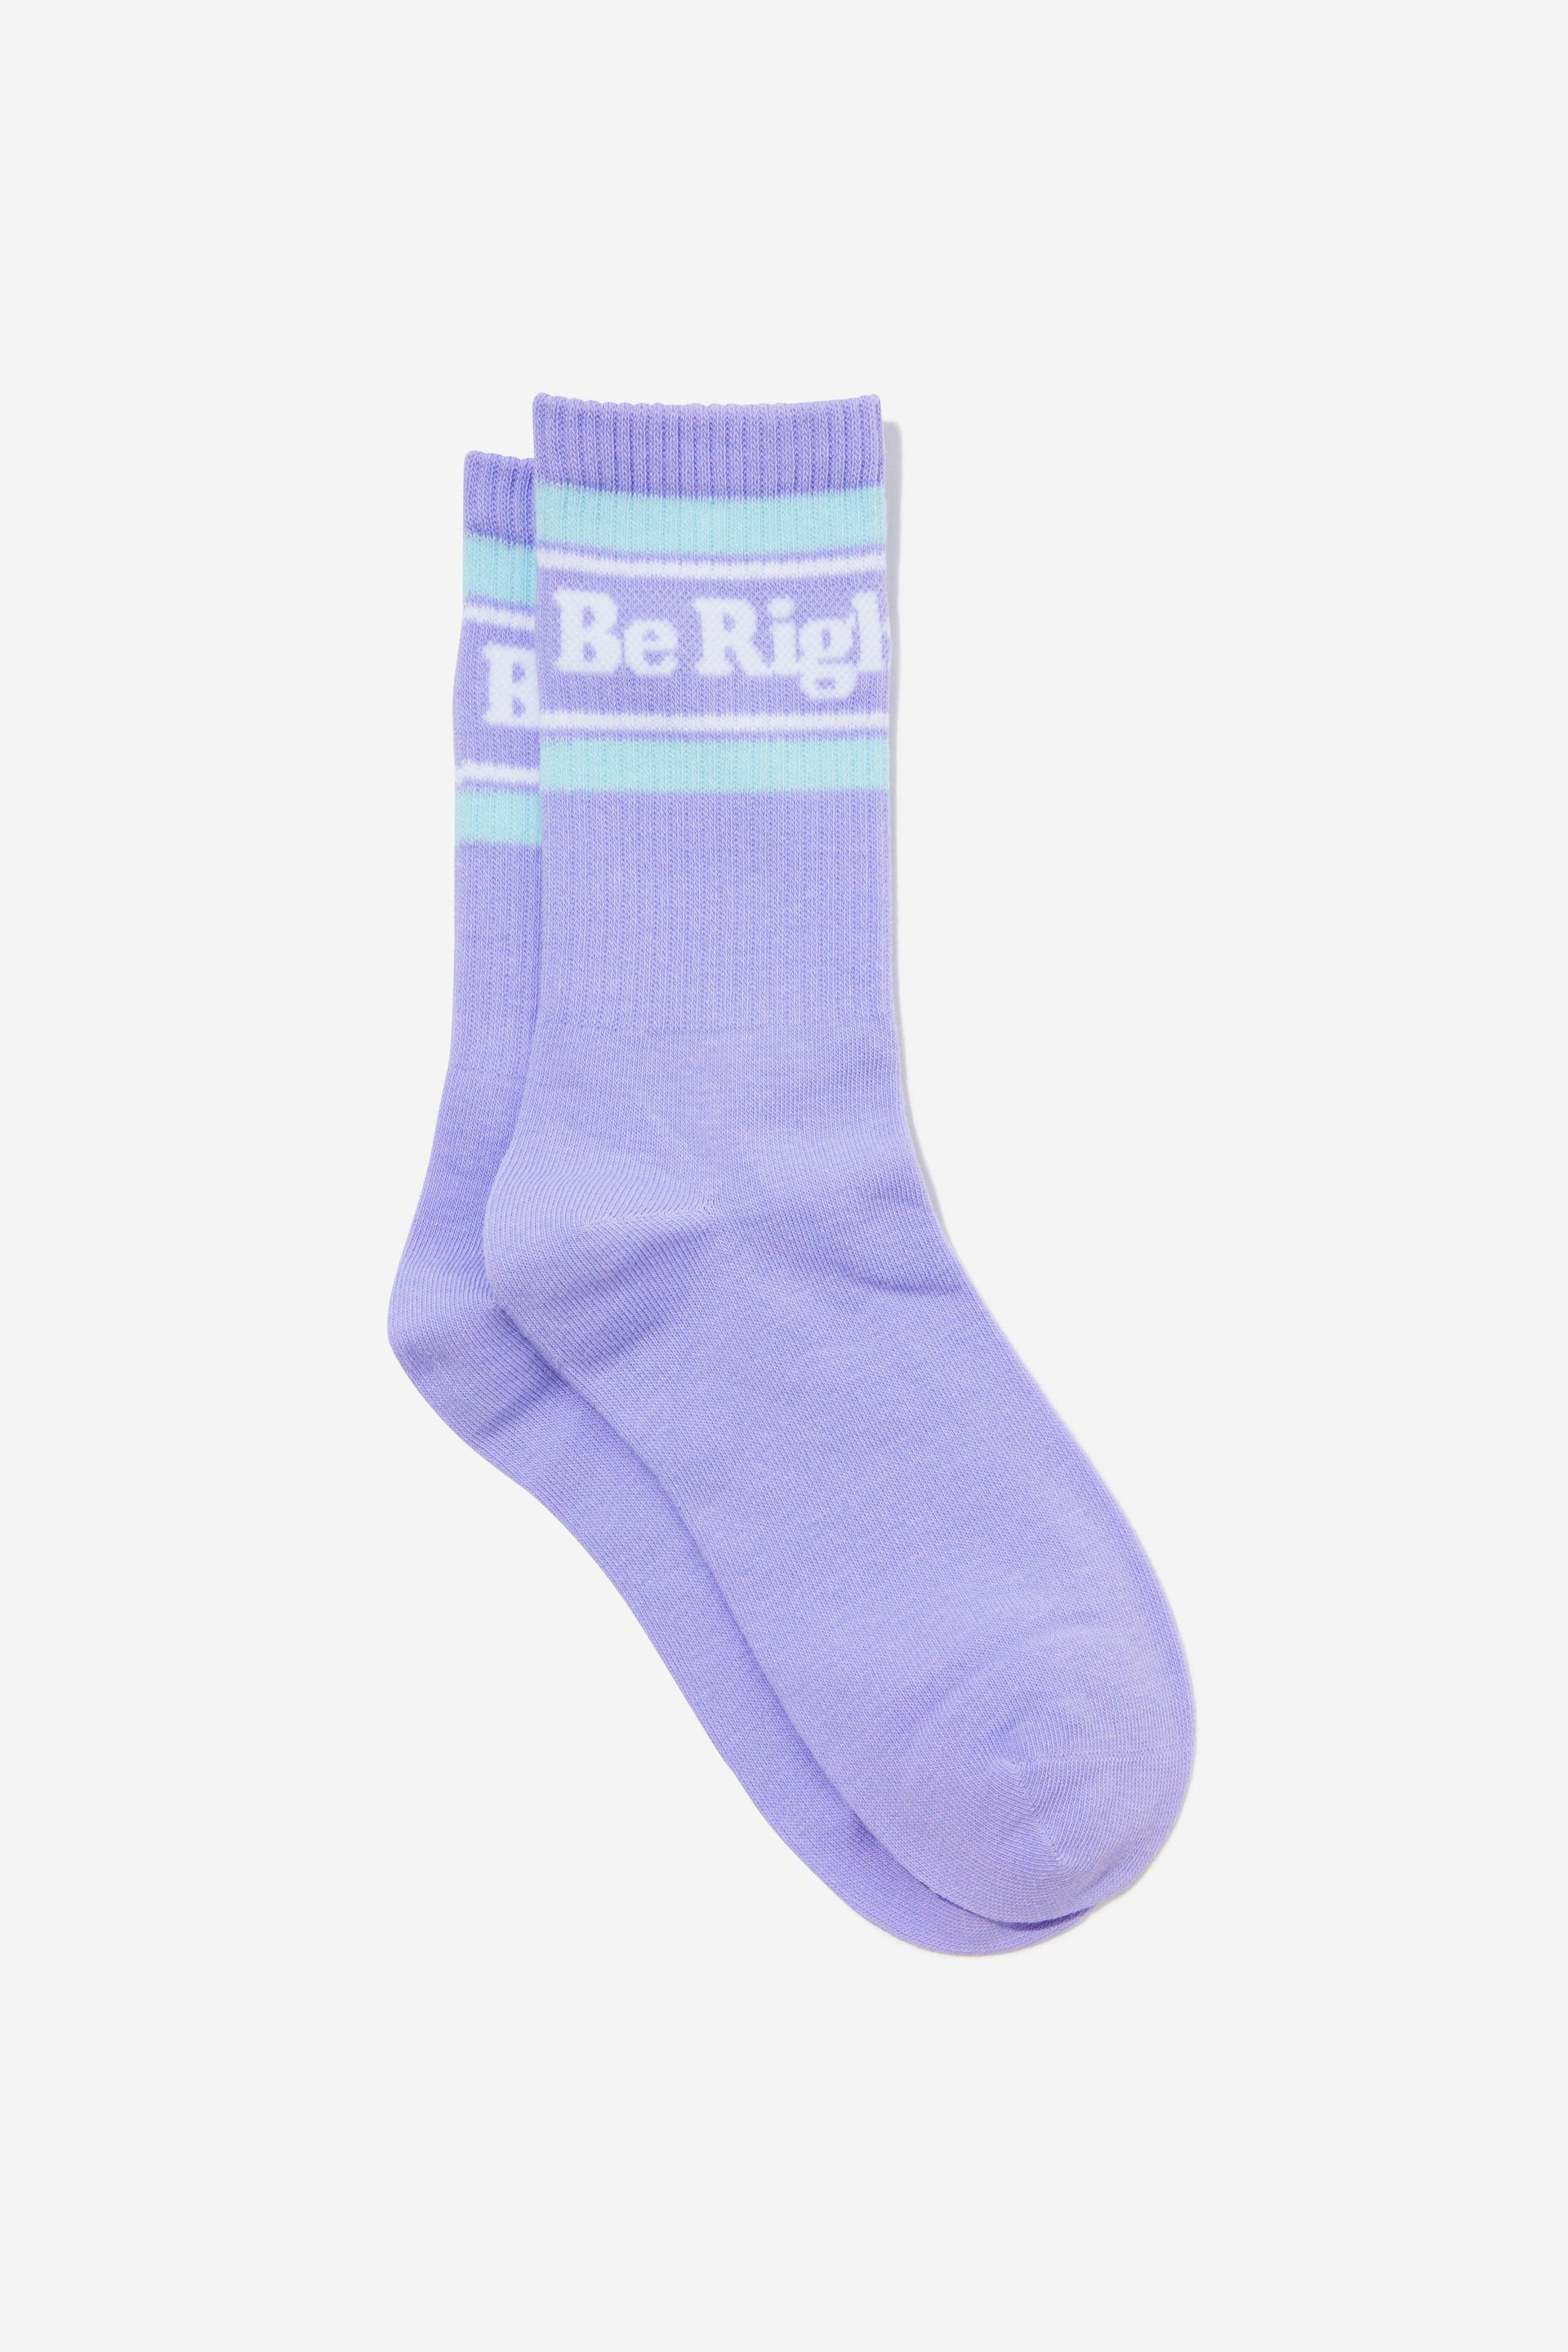 Typo - Socks - Be right back lilac blue stripe tube